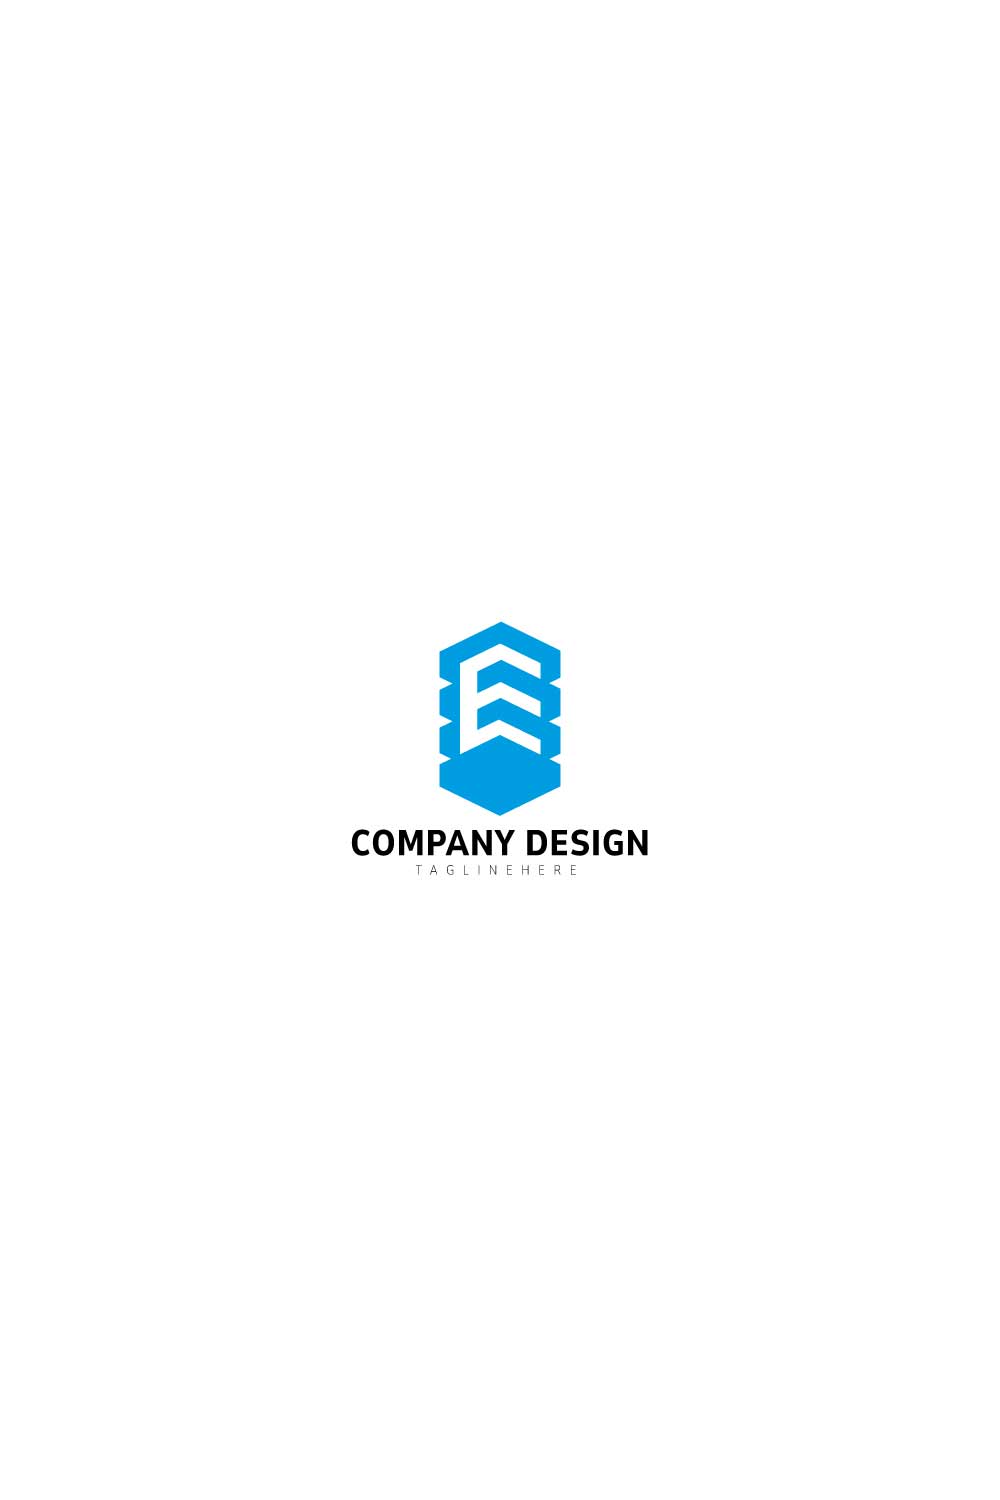 Professional letter E Building Logo design pinterest preview image.